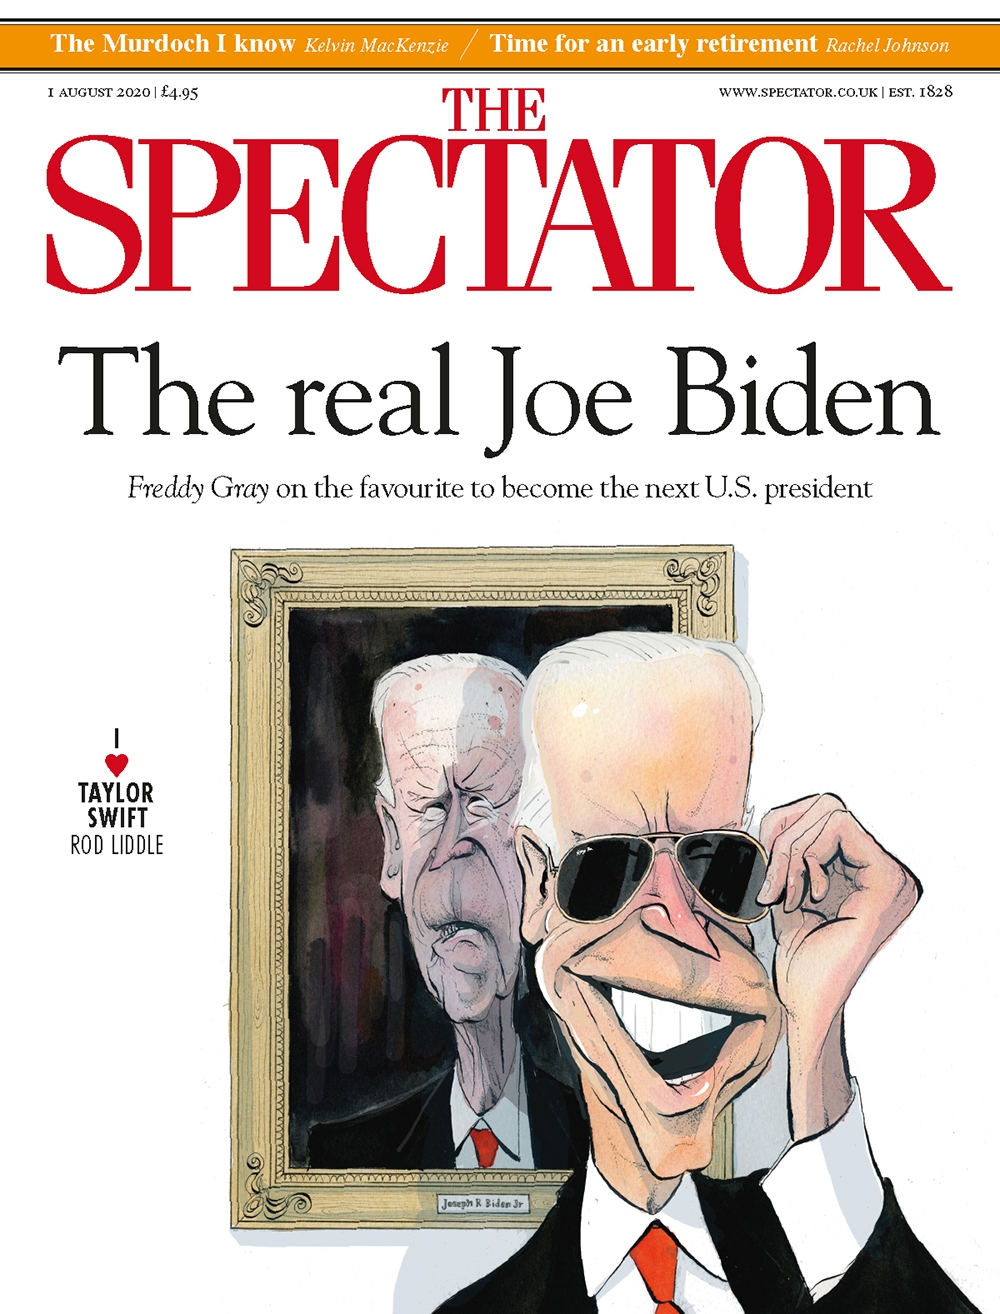 The SPECTATOR MAGAZINE 1 AUGUST 2020 The Real Joe Biden 